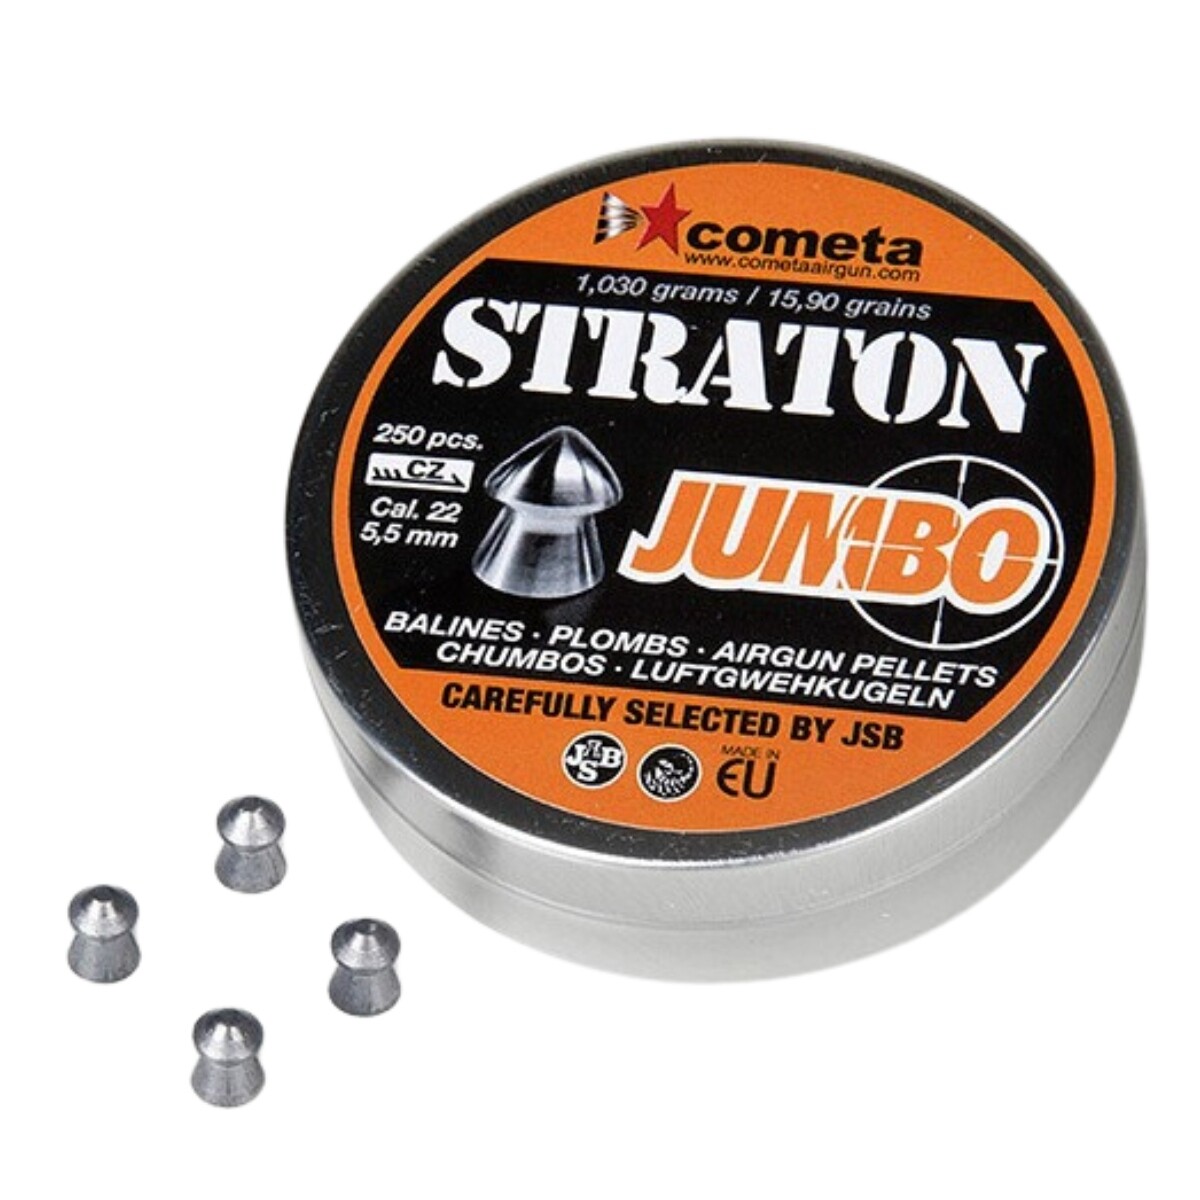 Chumbos Jsb Cz Jumbo Straton Cal 5.5mm X250un 